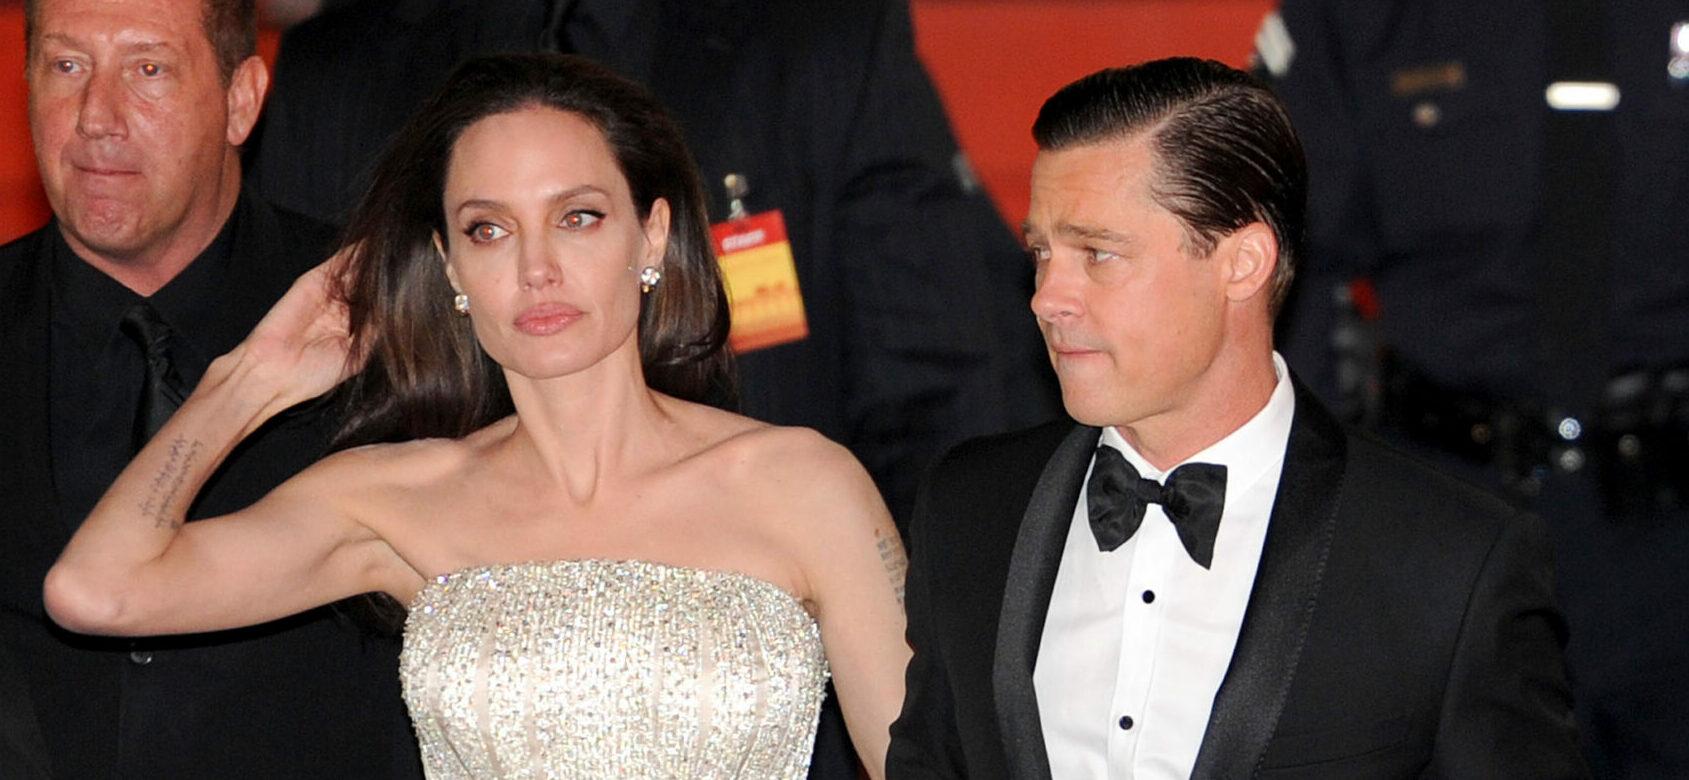 Brad Pitt and Angelina at The Sea Premiere in LA